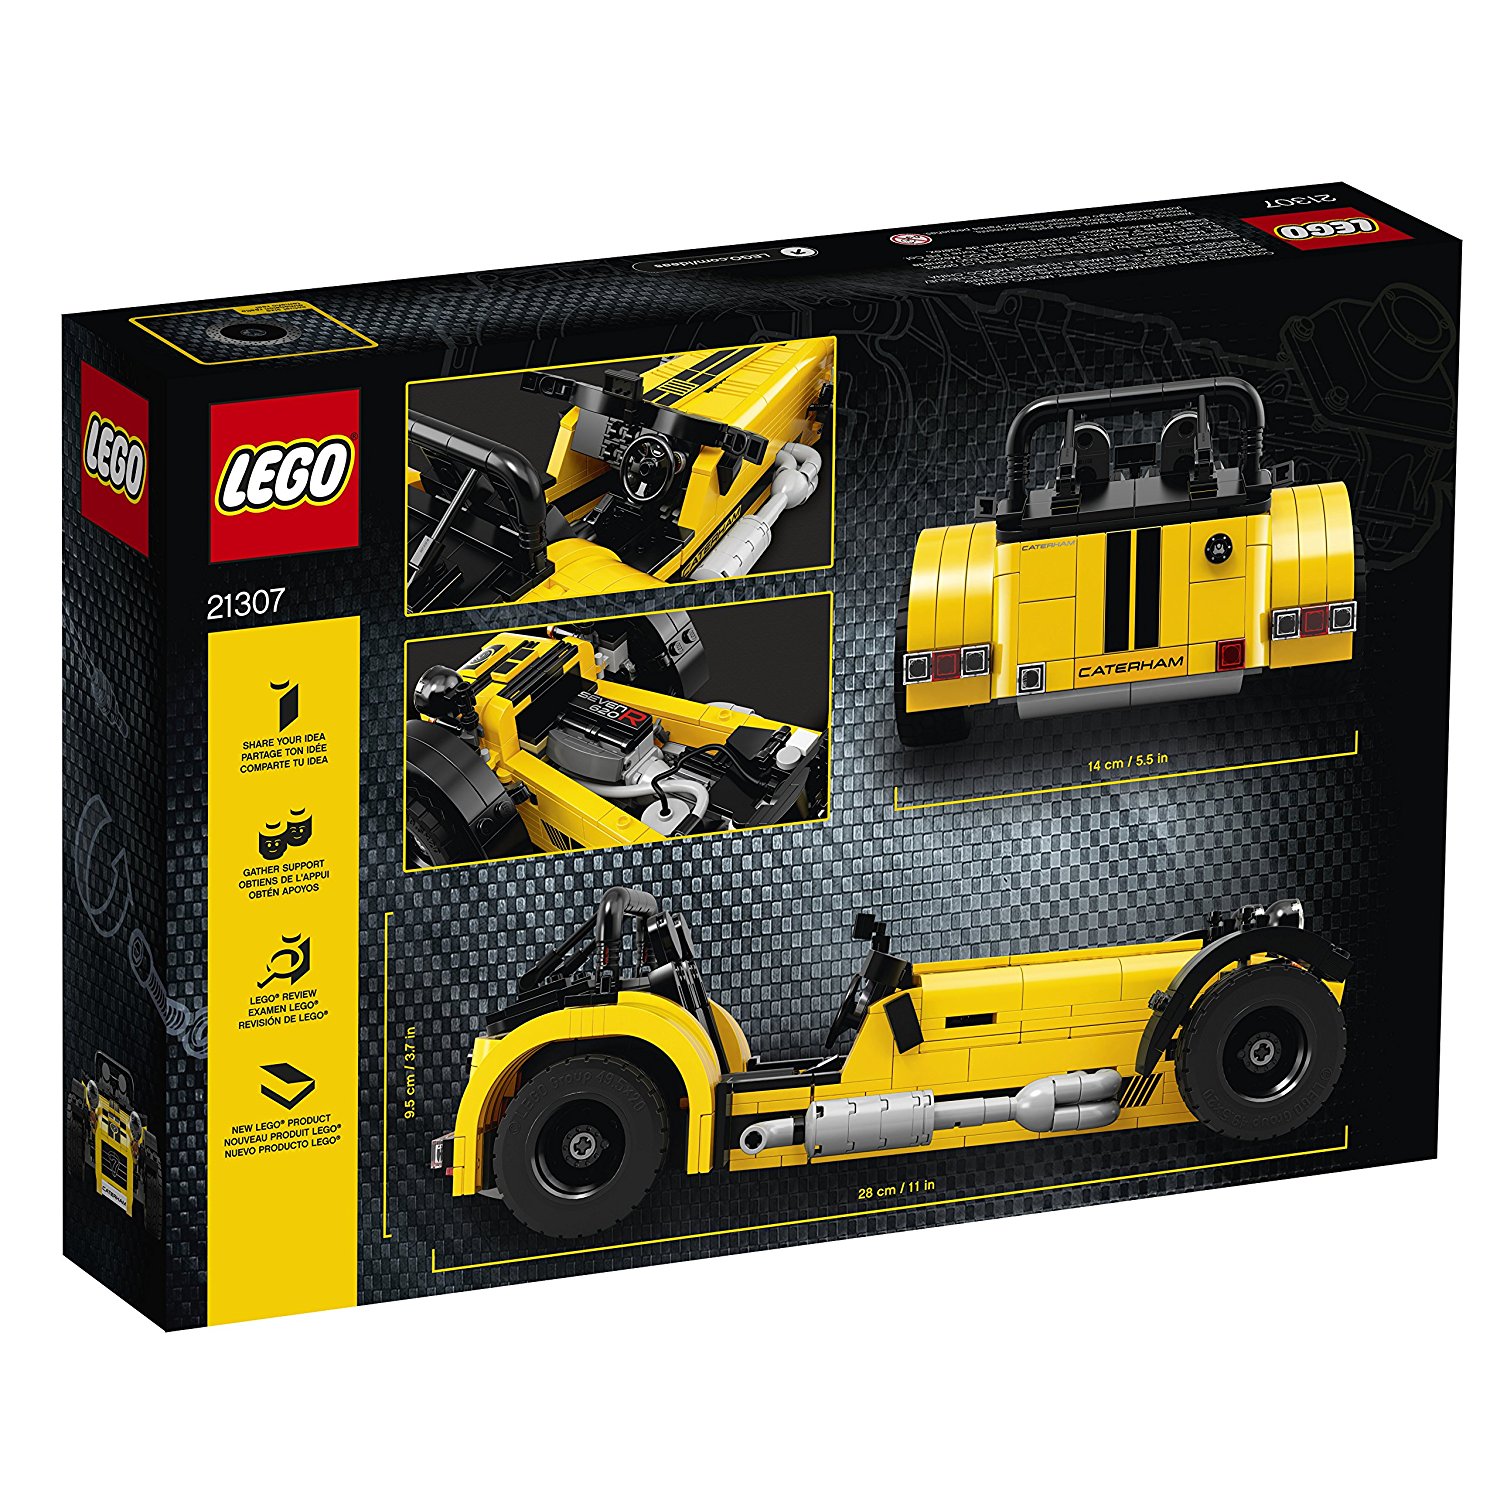 21307 LEGO Ideas Caterham Seven 620R